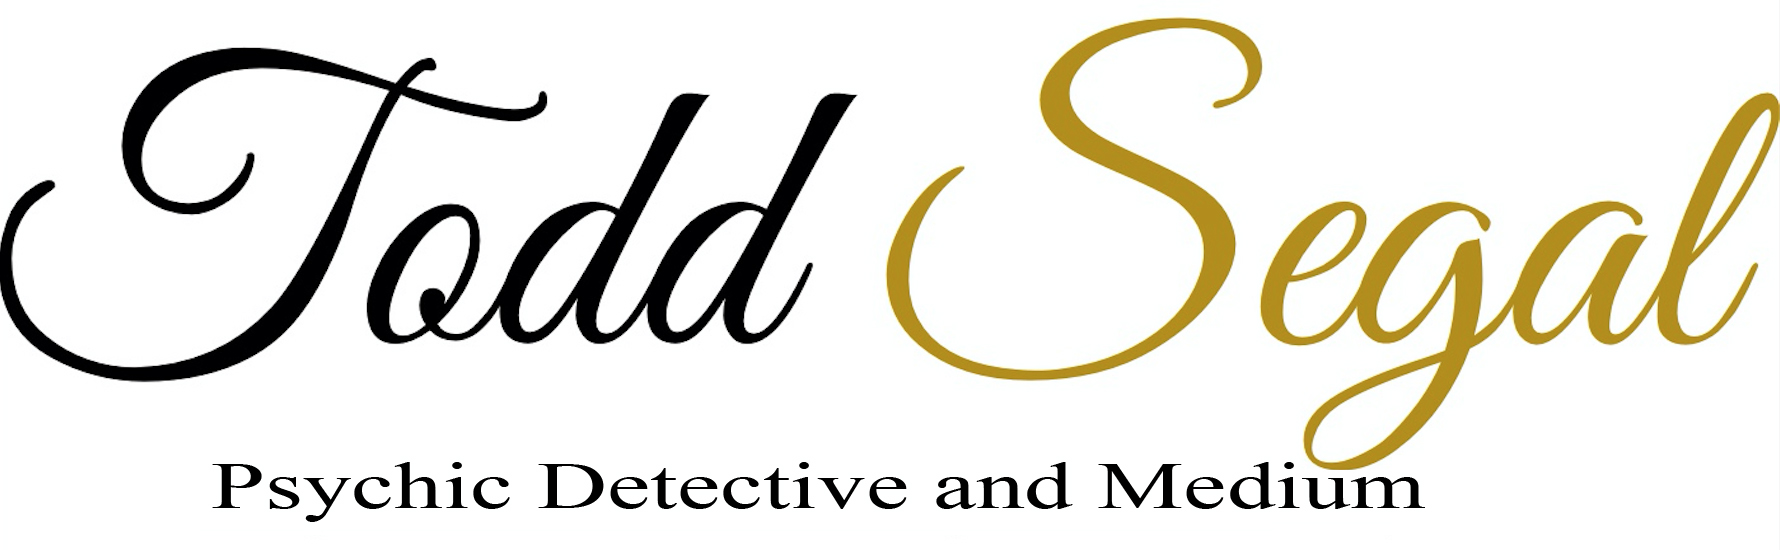 Todd Segal Psychic Detective and Medium